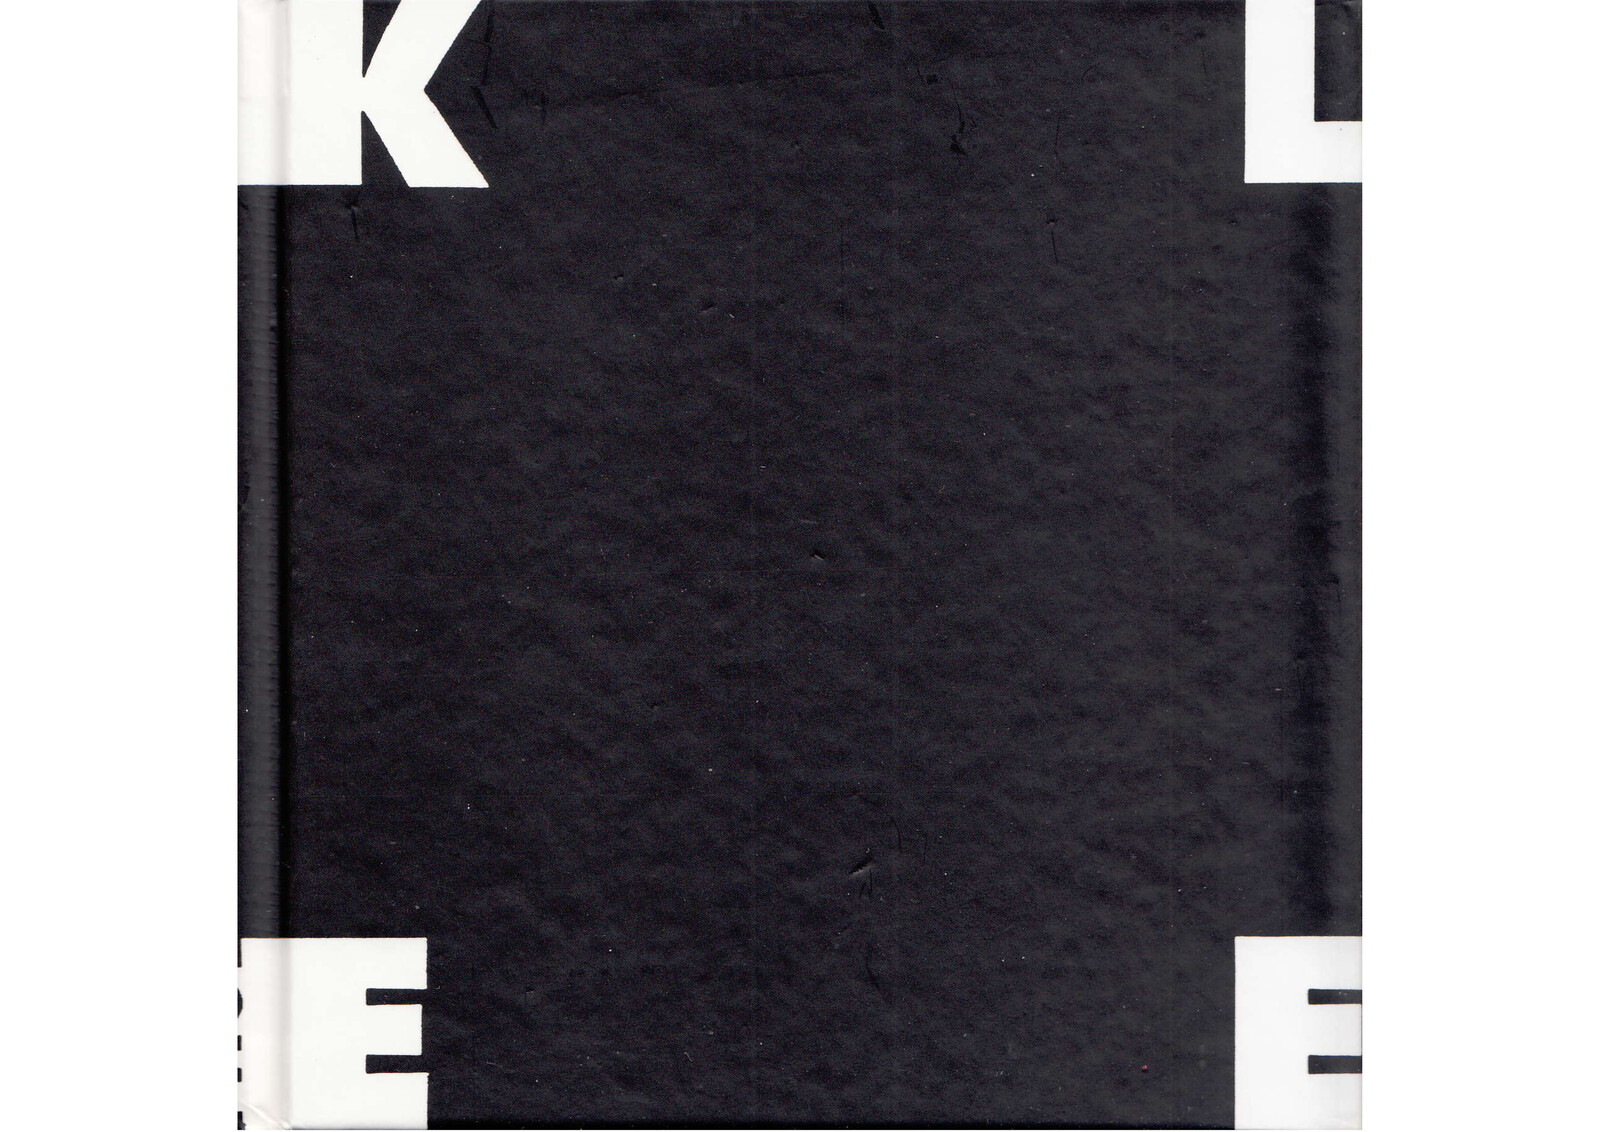 Katalog-Cover: Paul Klee